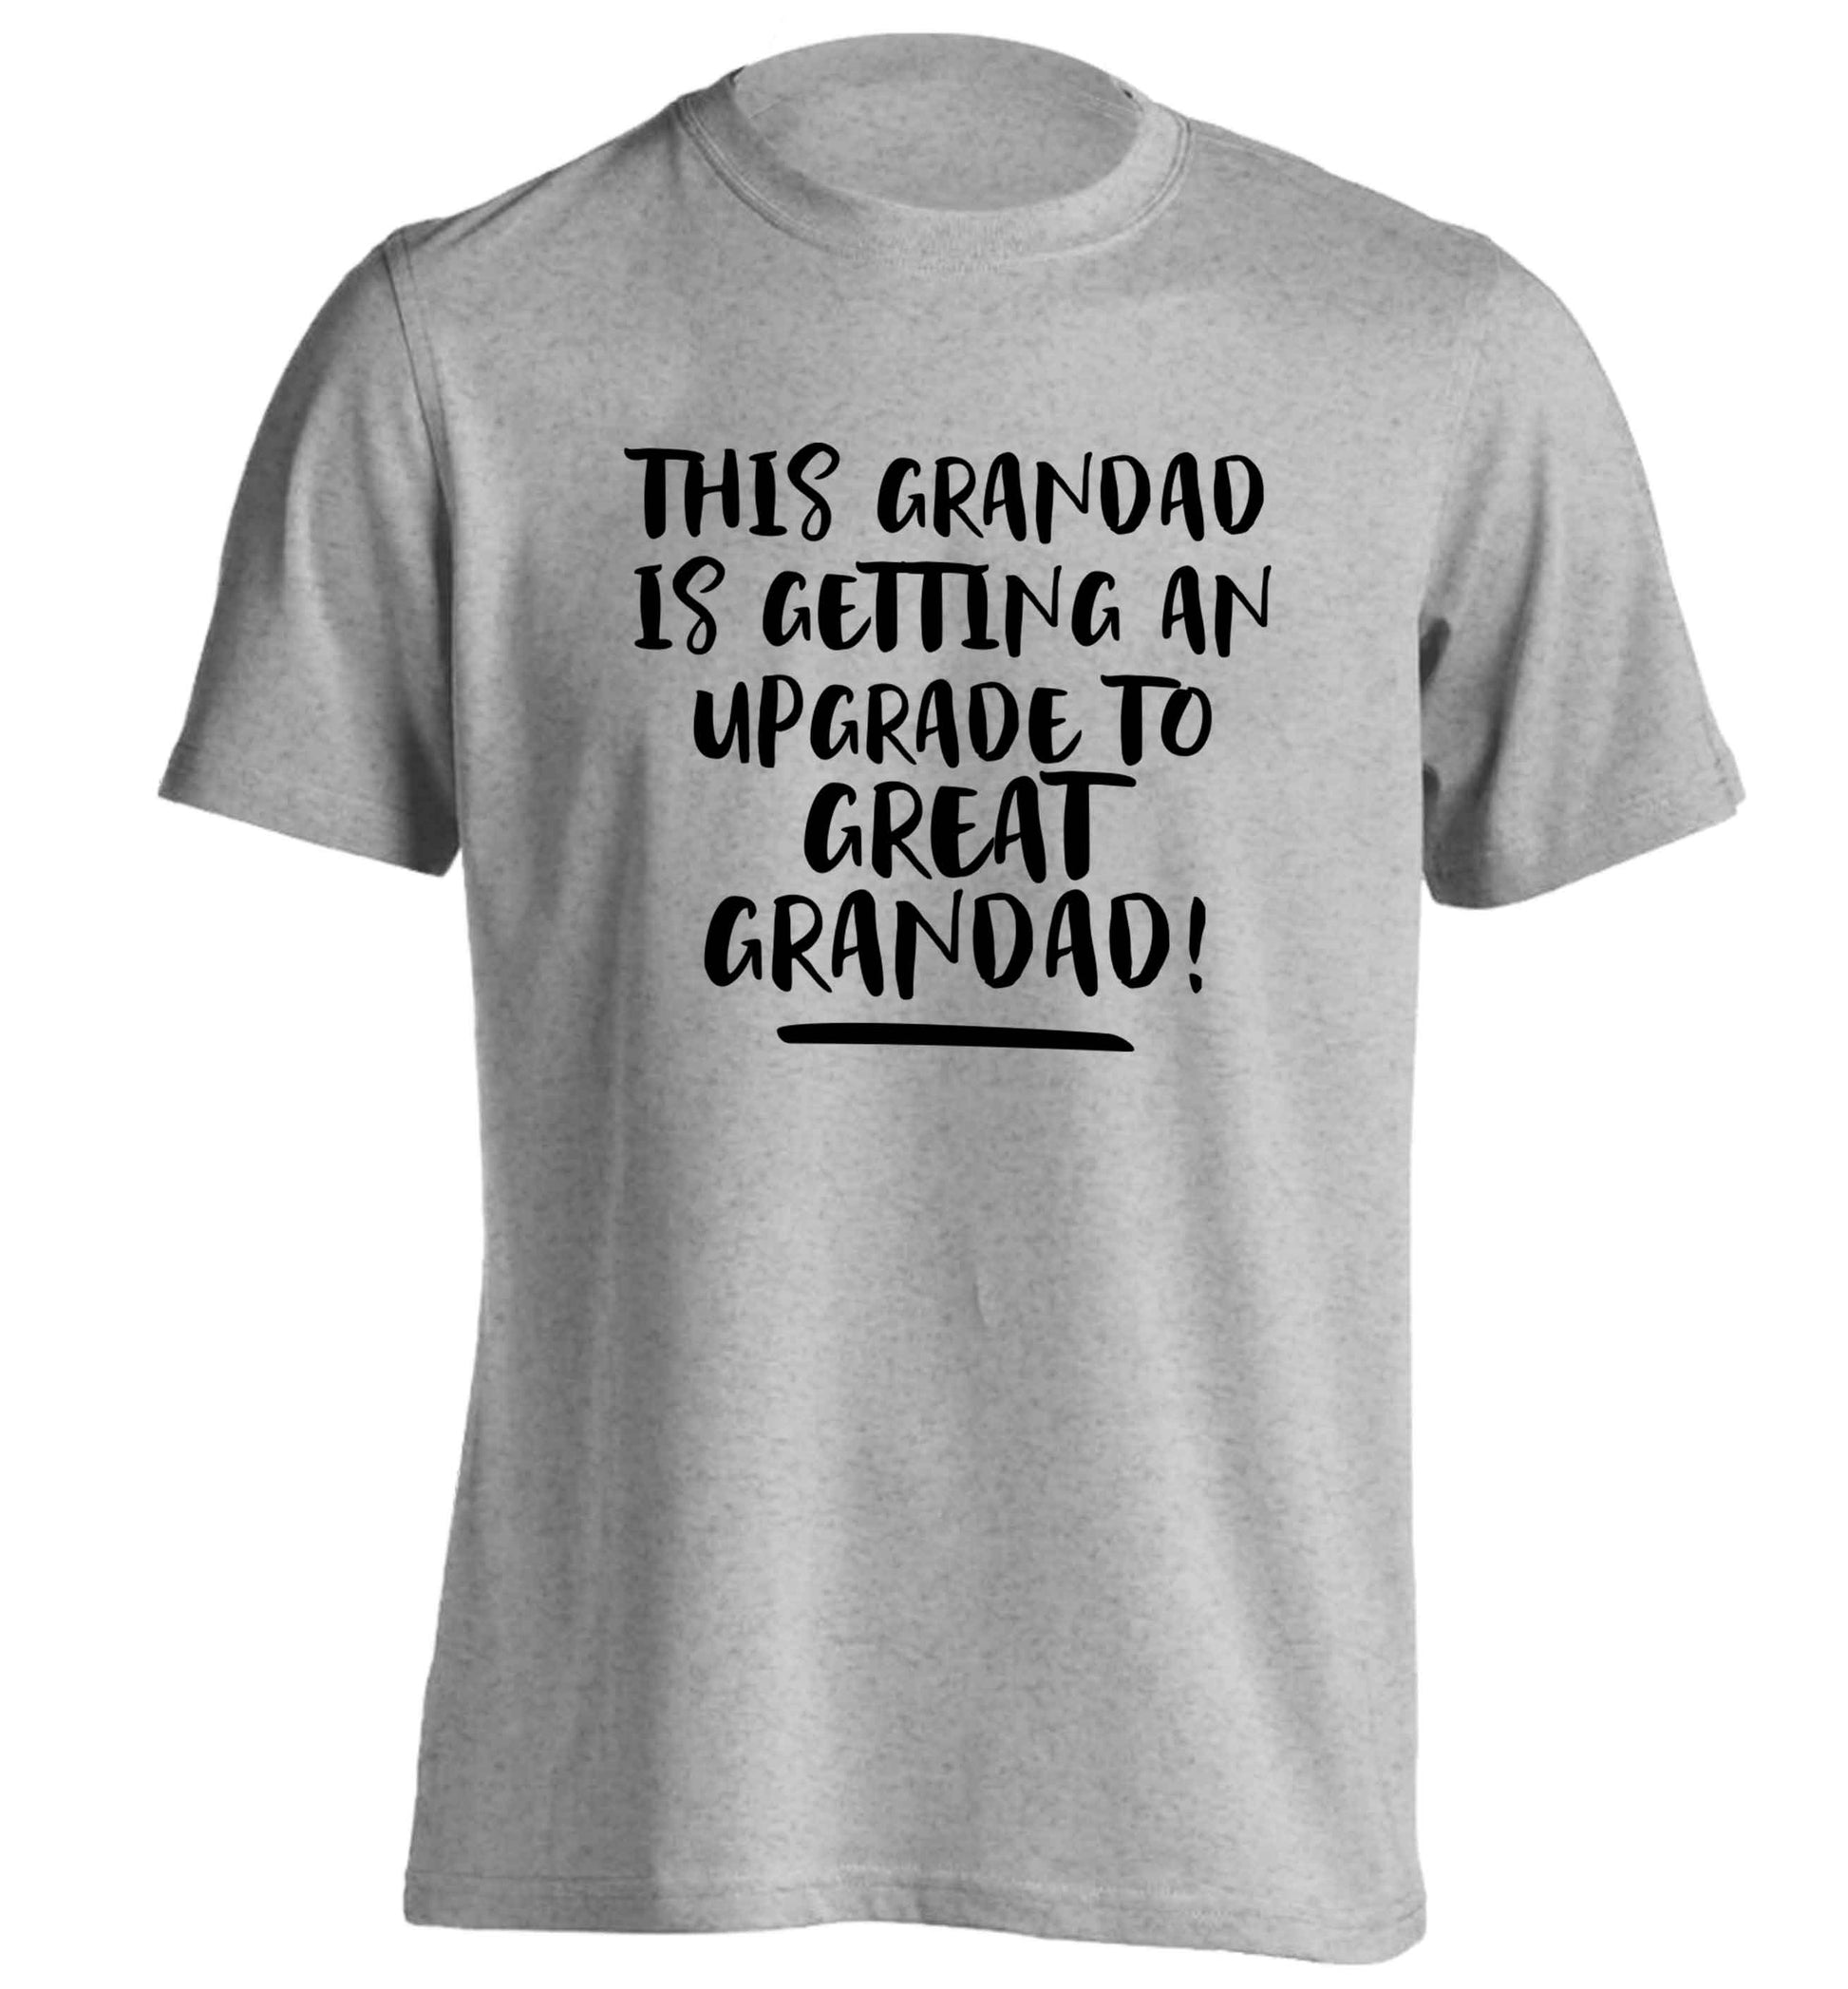 This grandad is getting an upgrade to great grandad! adults unisex grey Tshirt 2XL